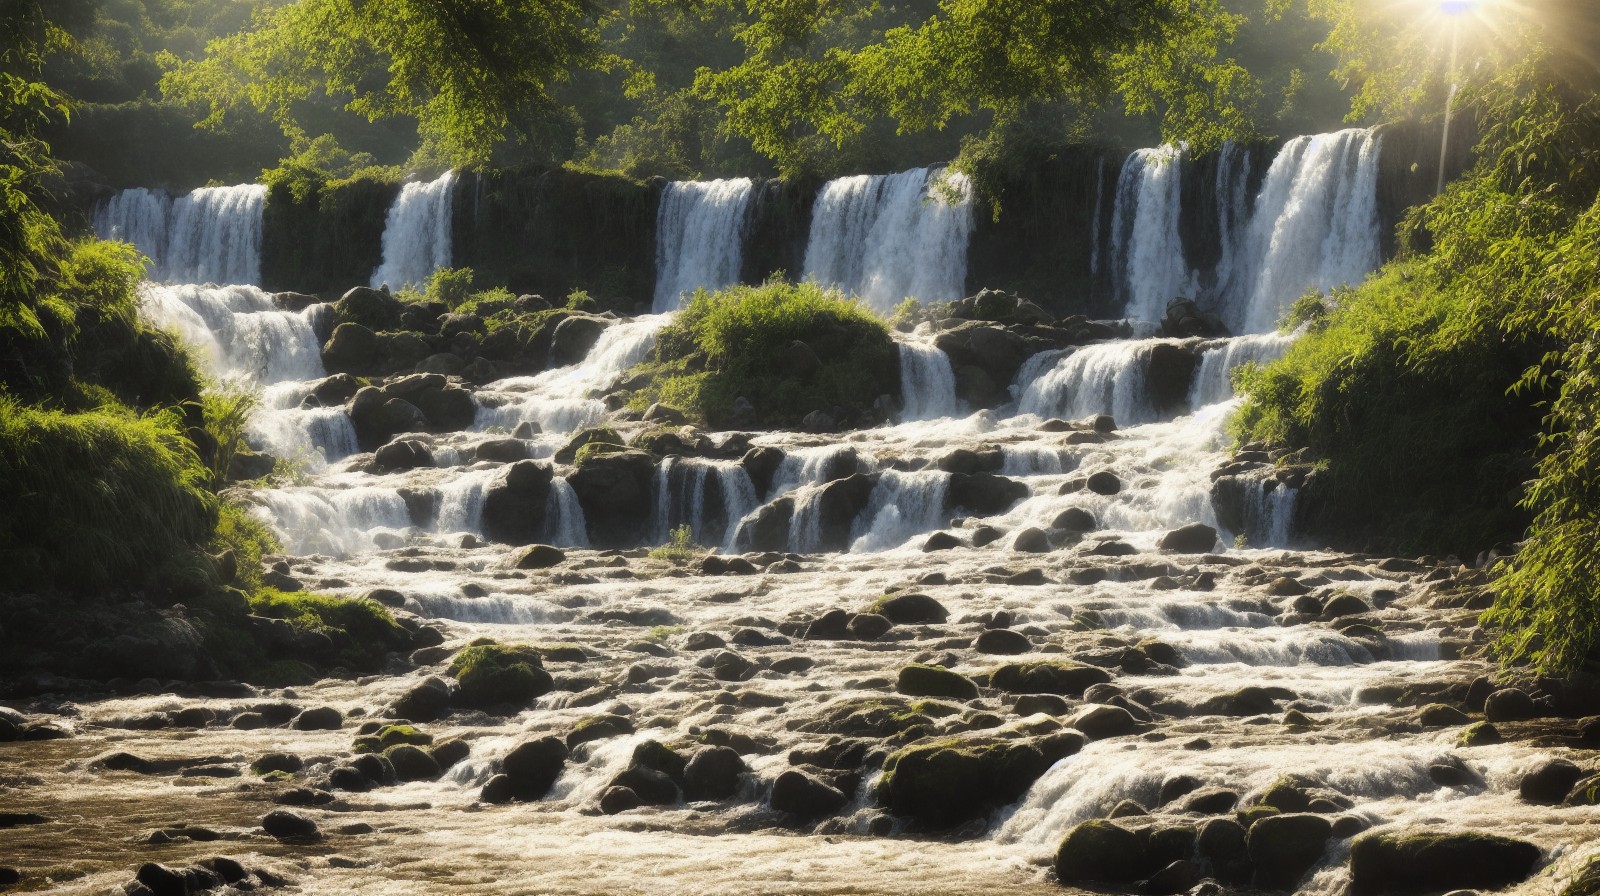 photo of waterfall on stream in sunlight